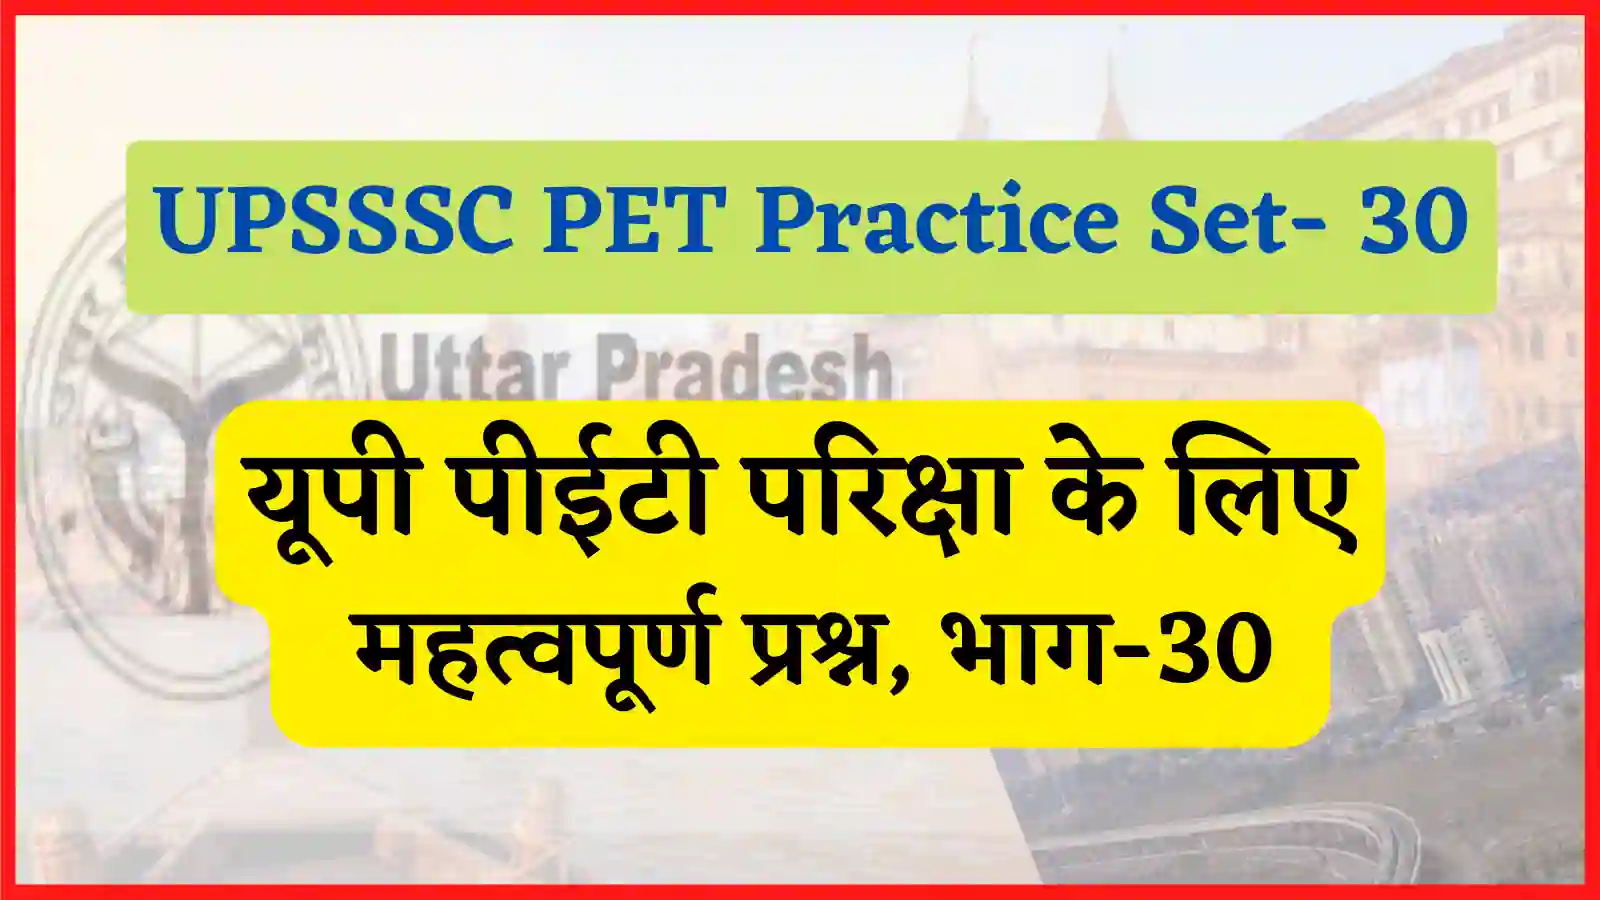 UPSSSC PET Practice Set-30 